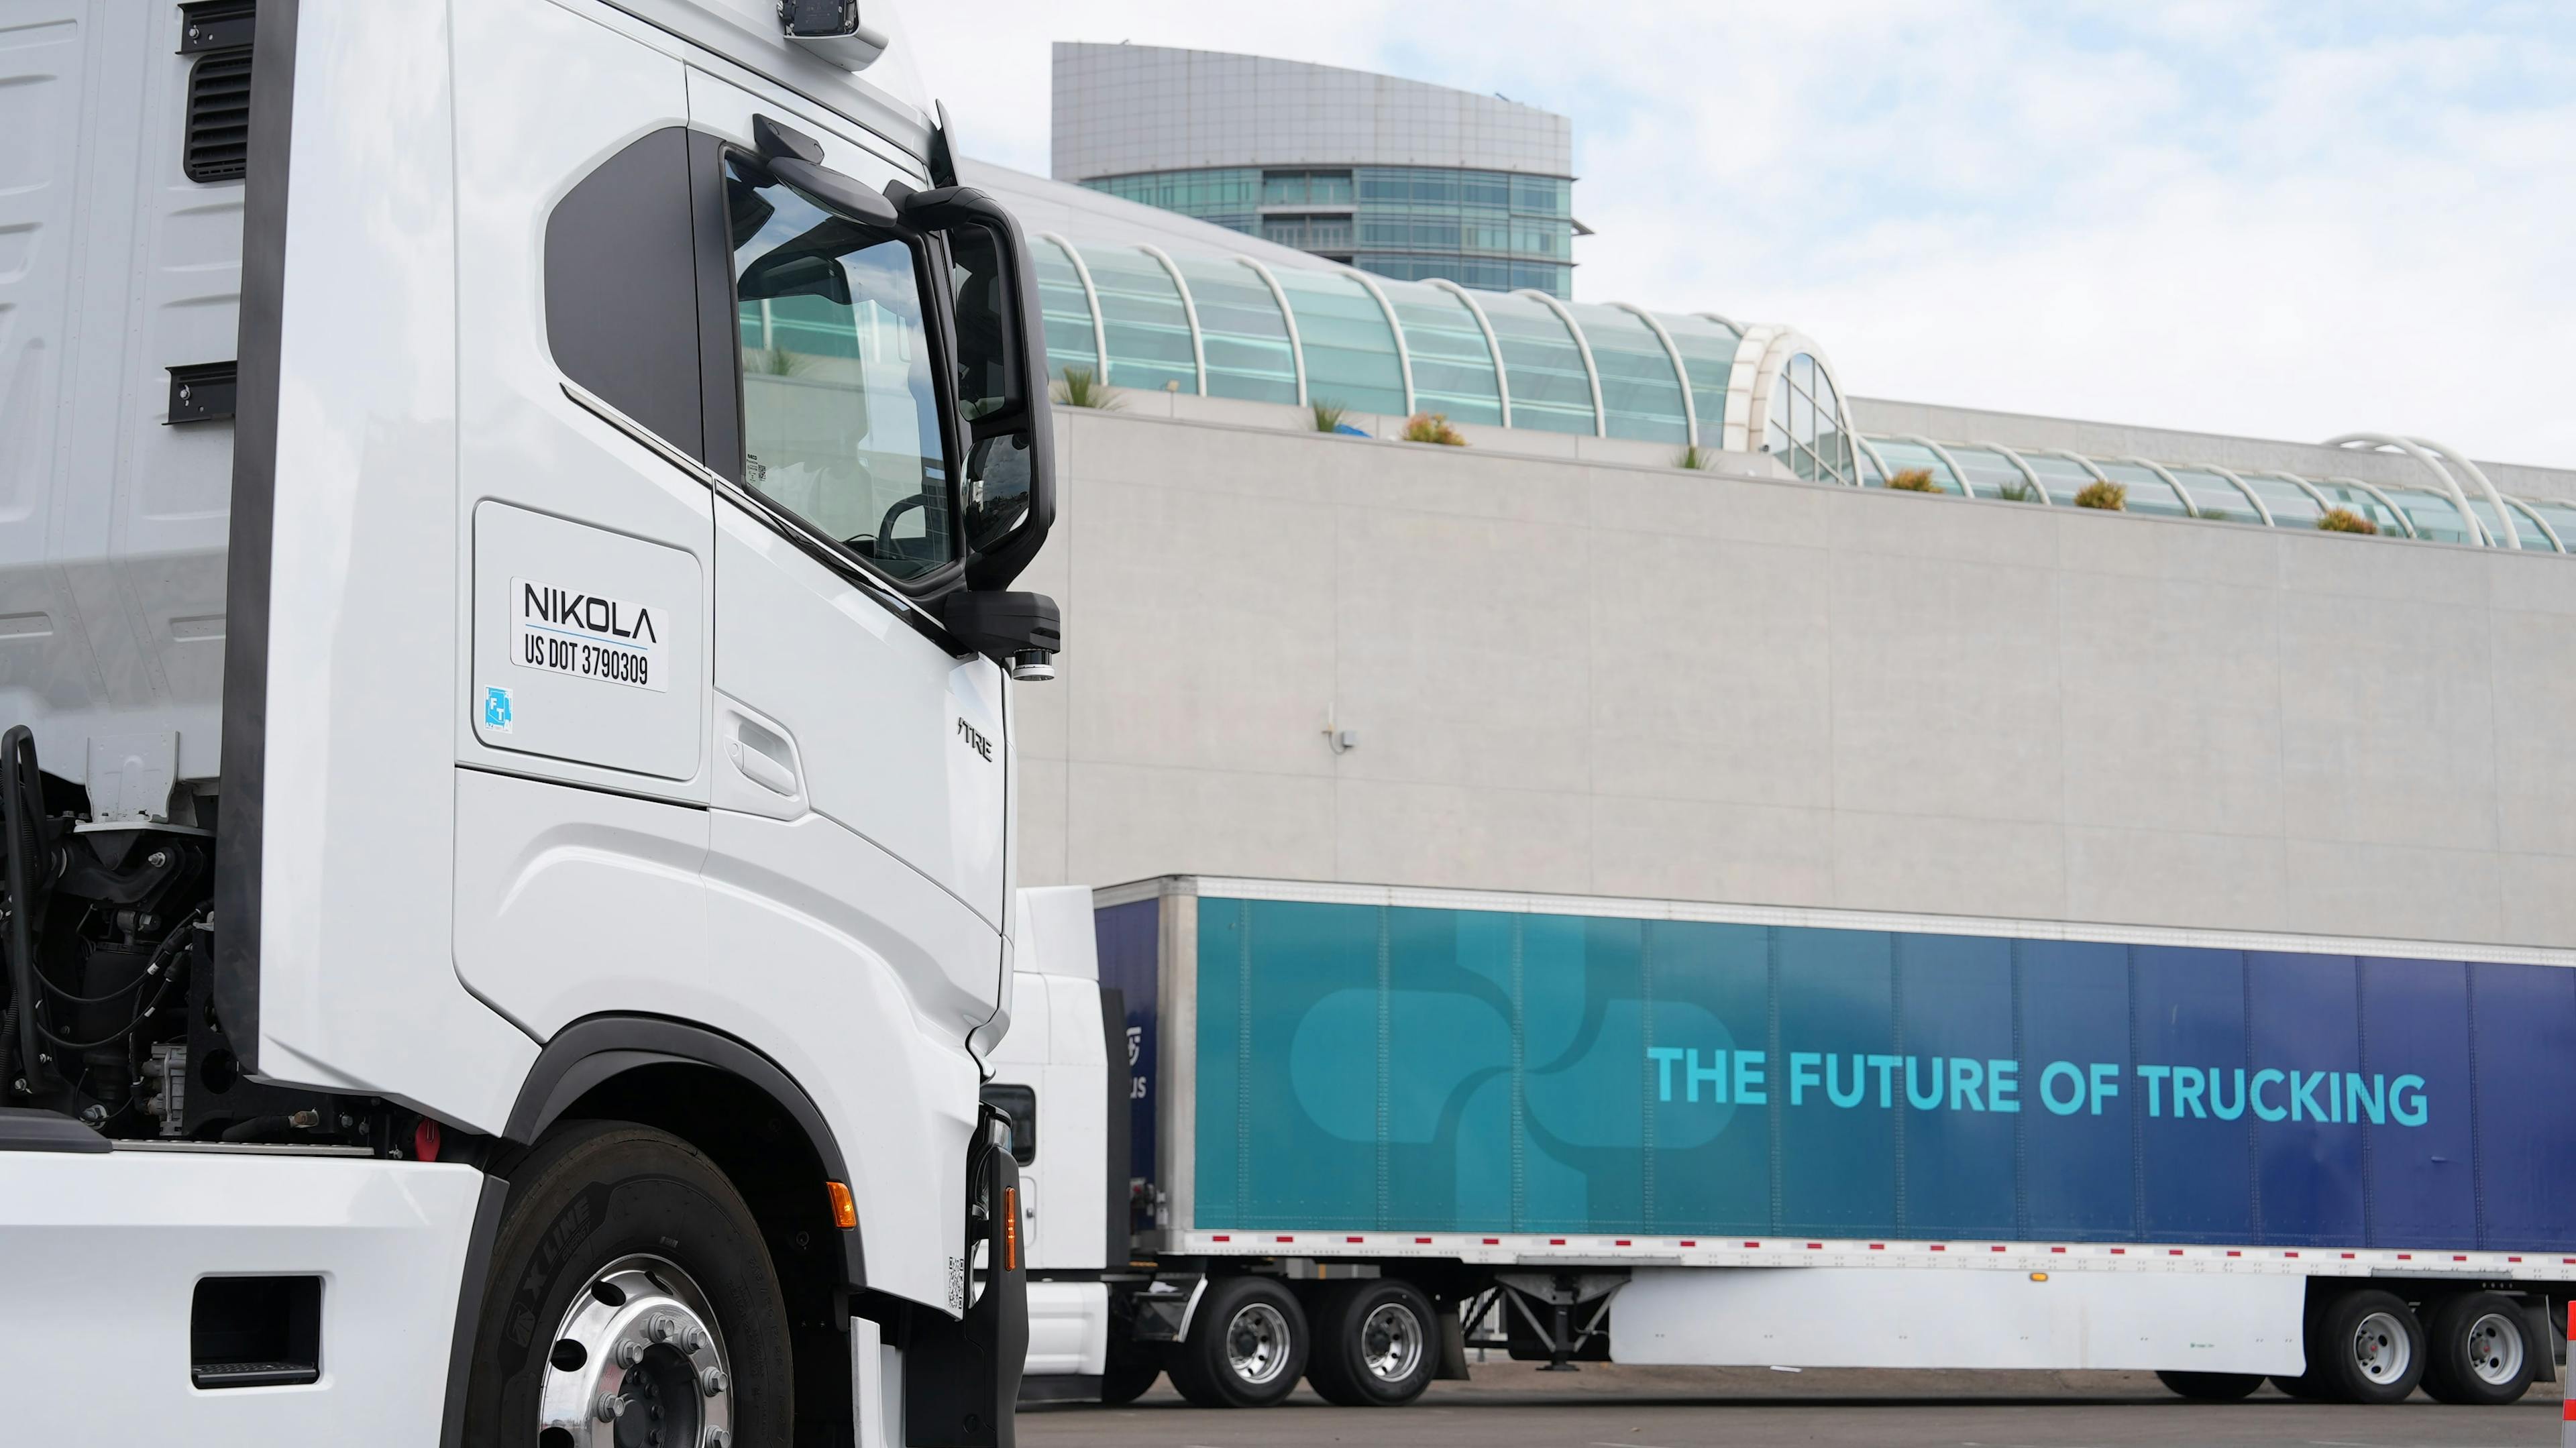 Plus truck with Nikola logo, The future of trucking